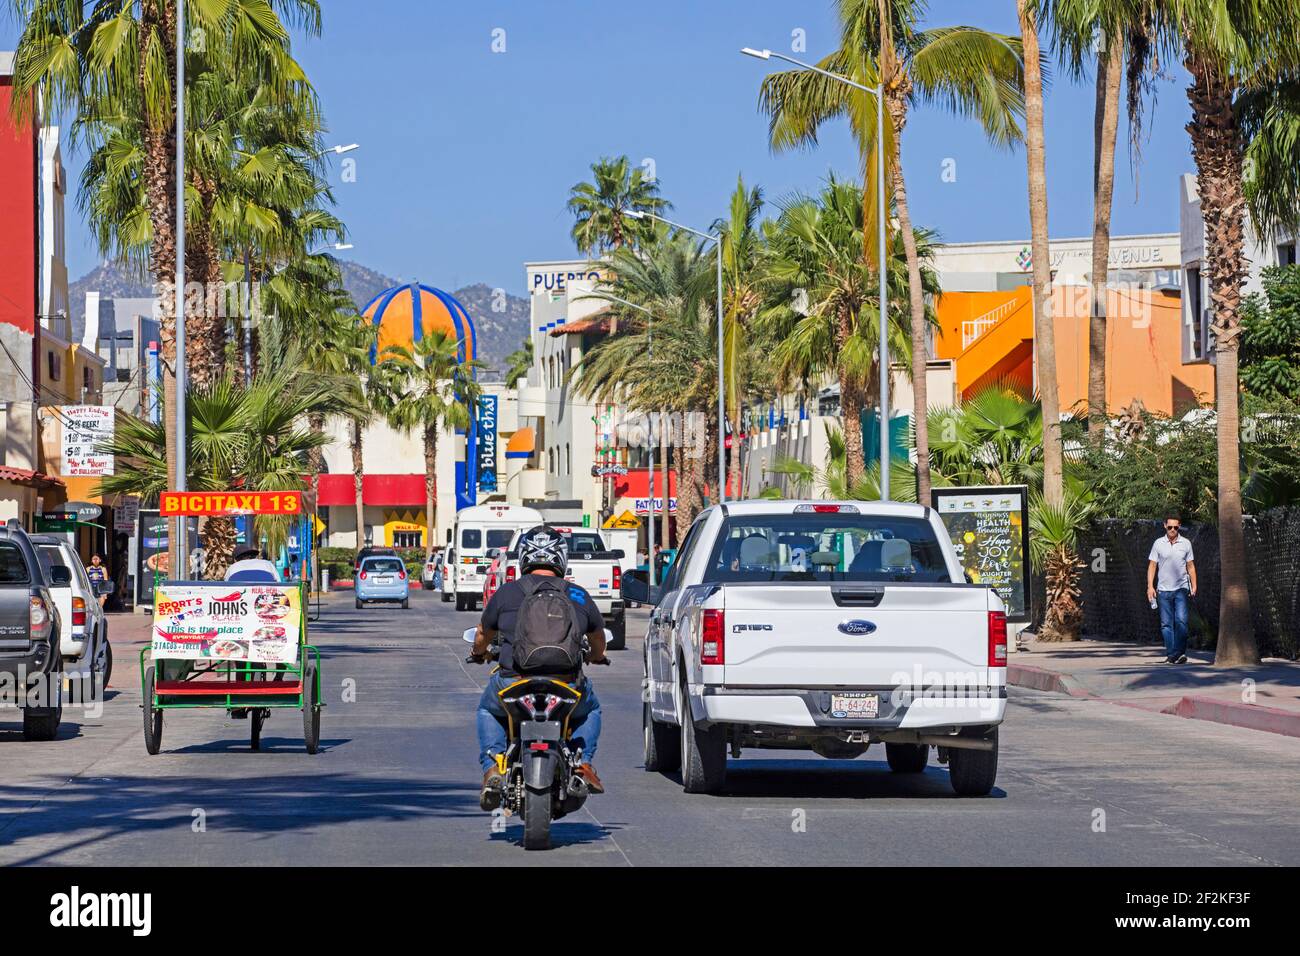 Streetscene in main street of the city Cabo San Lucas on the peninsula of Baja California Sur, Mexico Stock Photo